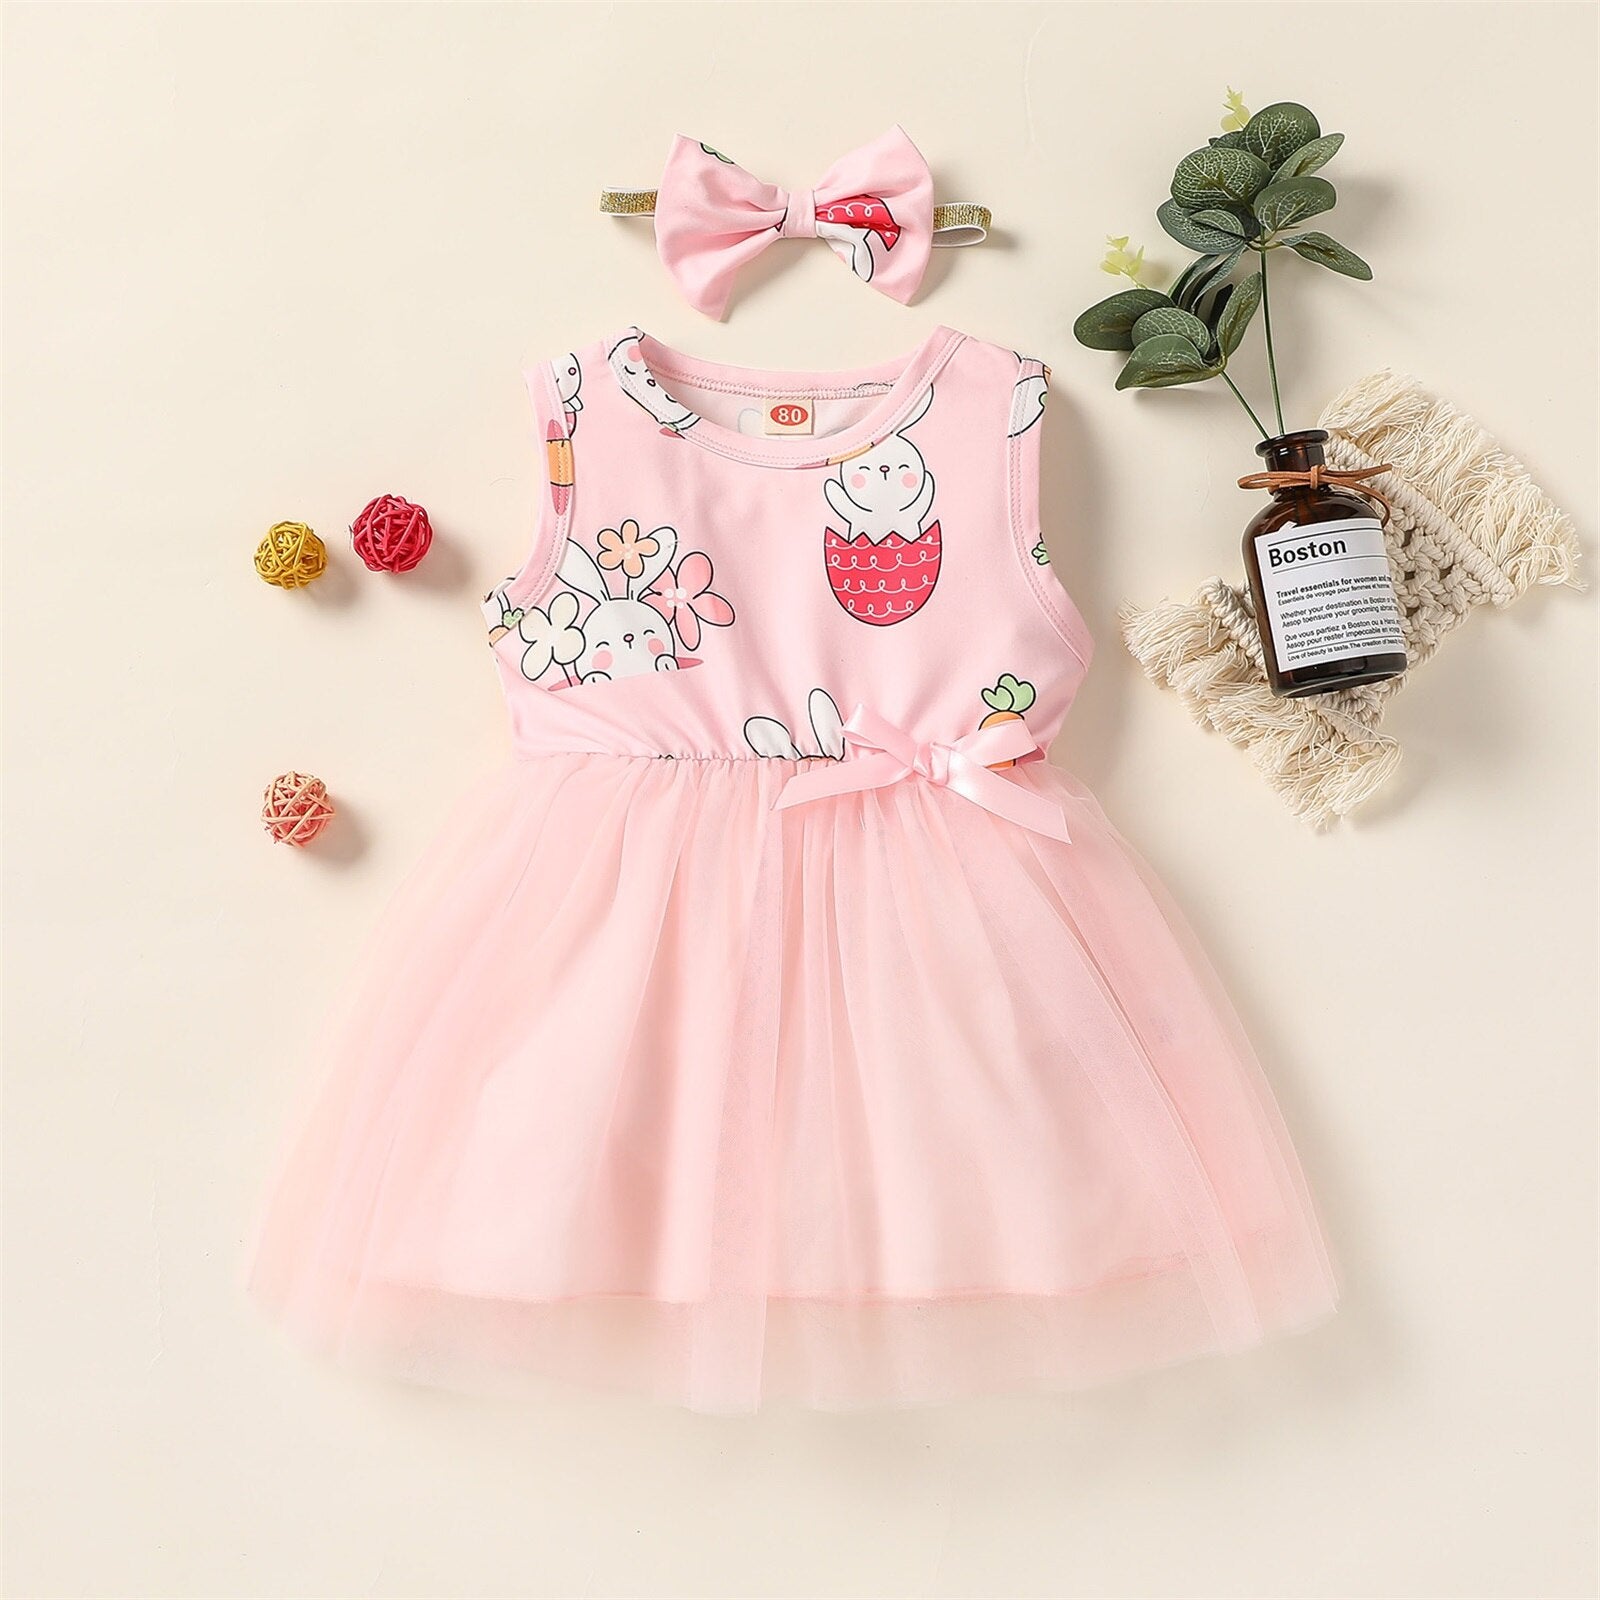 Vestido Infantil Tule Coelhinho + Lacinho vestido Loja Click Certo Rosa 3-6 meses 44cm 